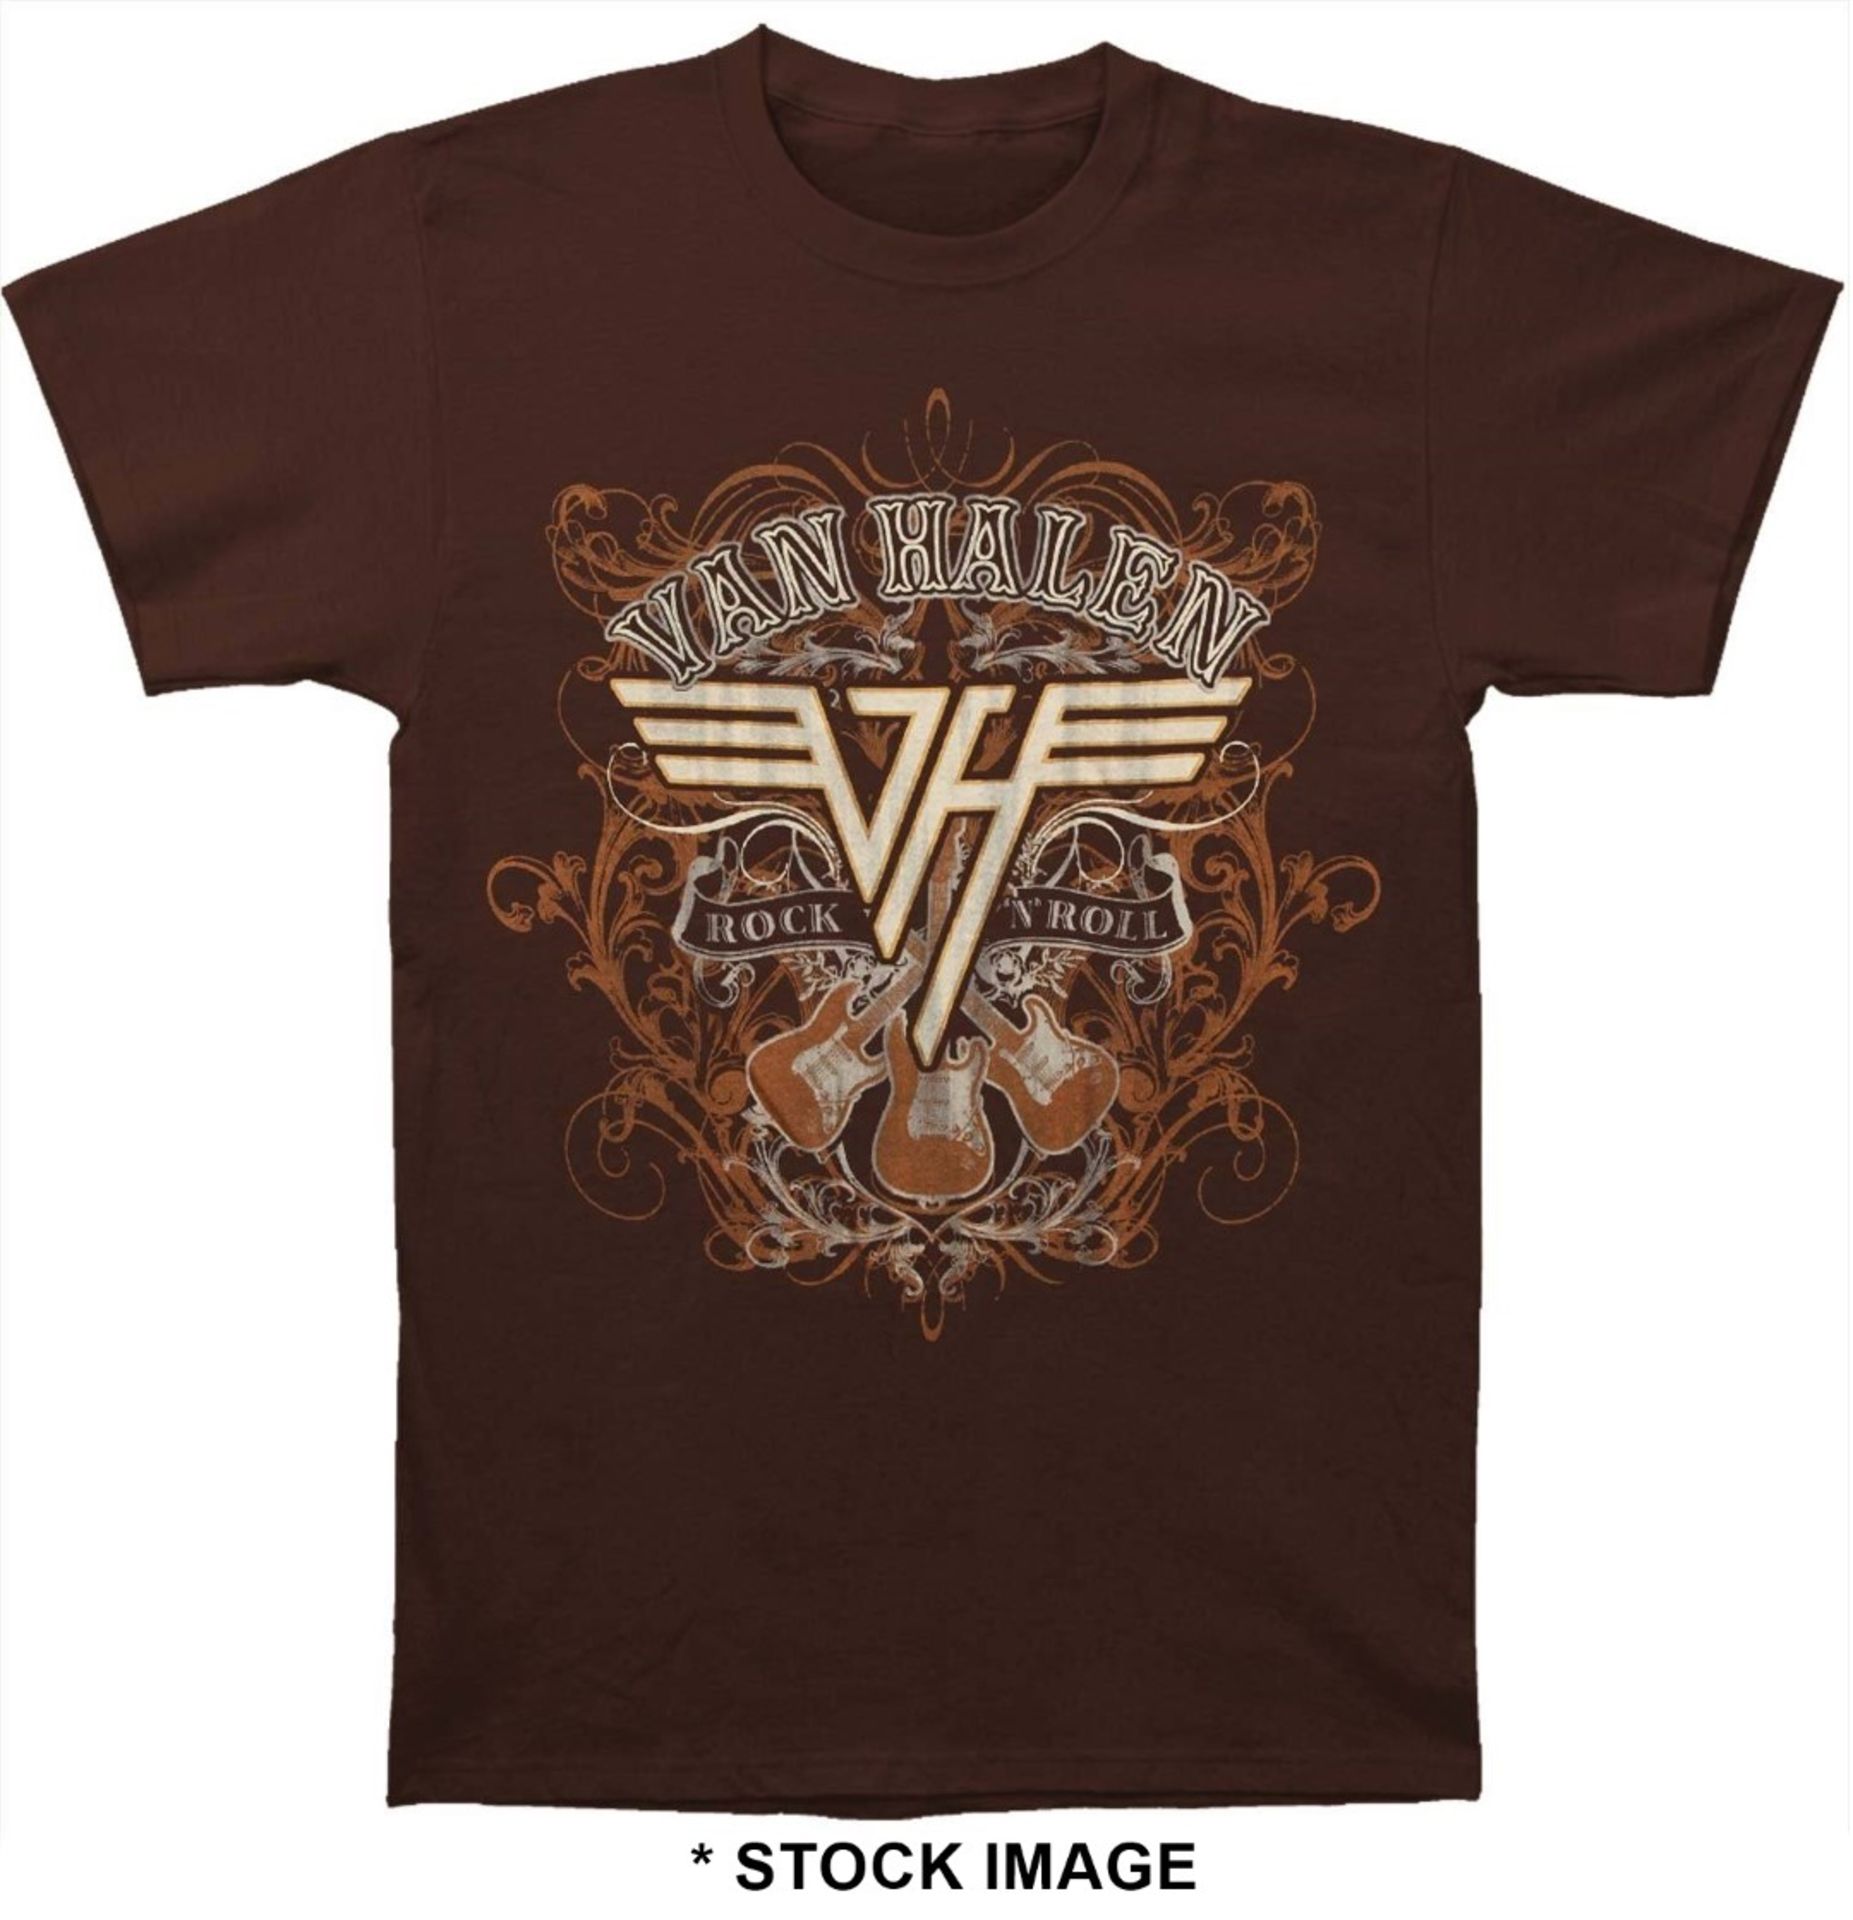 1 x VAN HALEN Rock and Roll Logo Short Sleeve Men's T-Shirt by Gildan - Size: Small - Colour: Brown